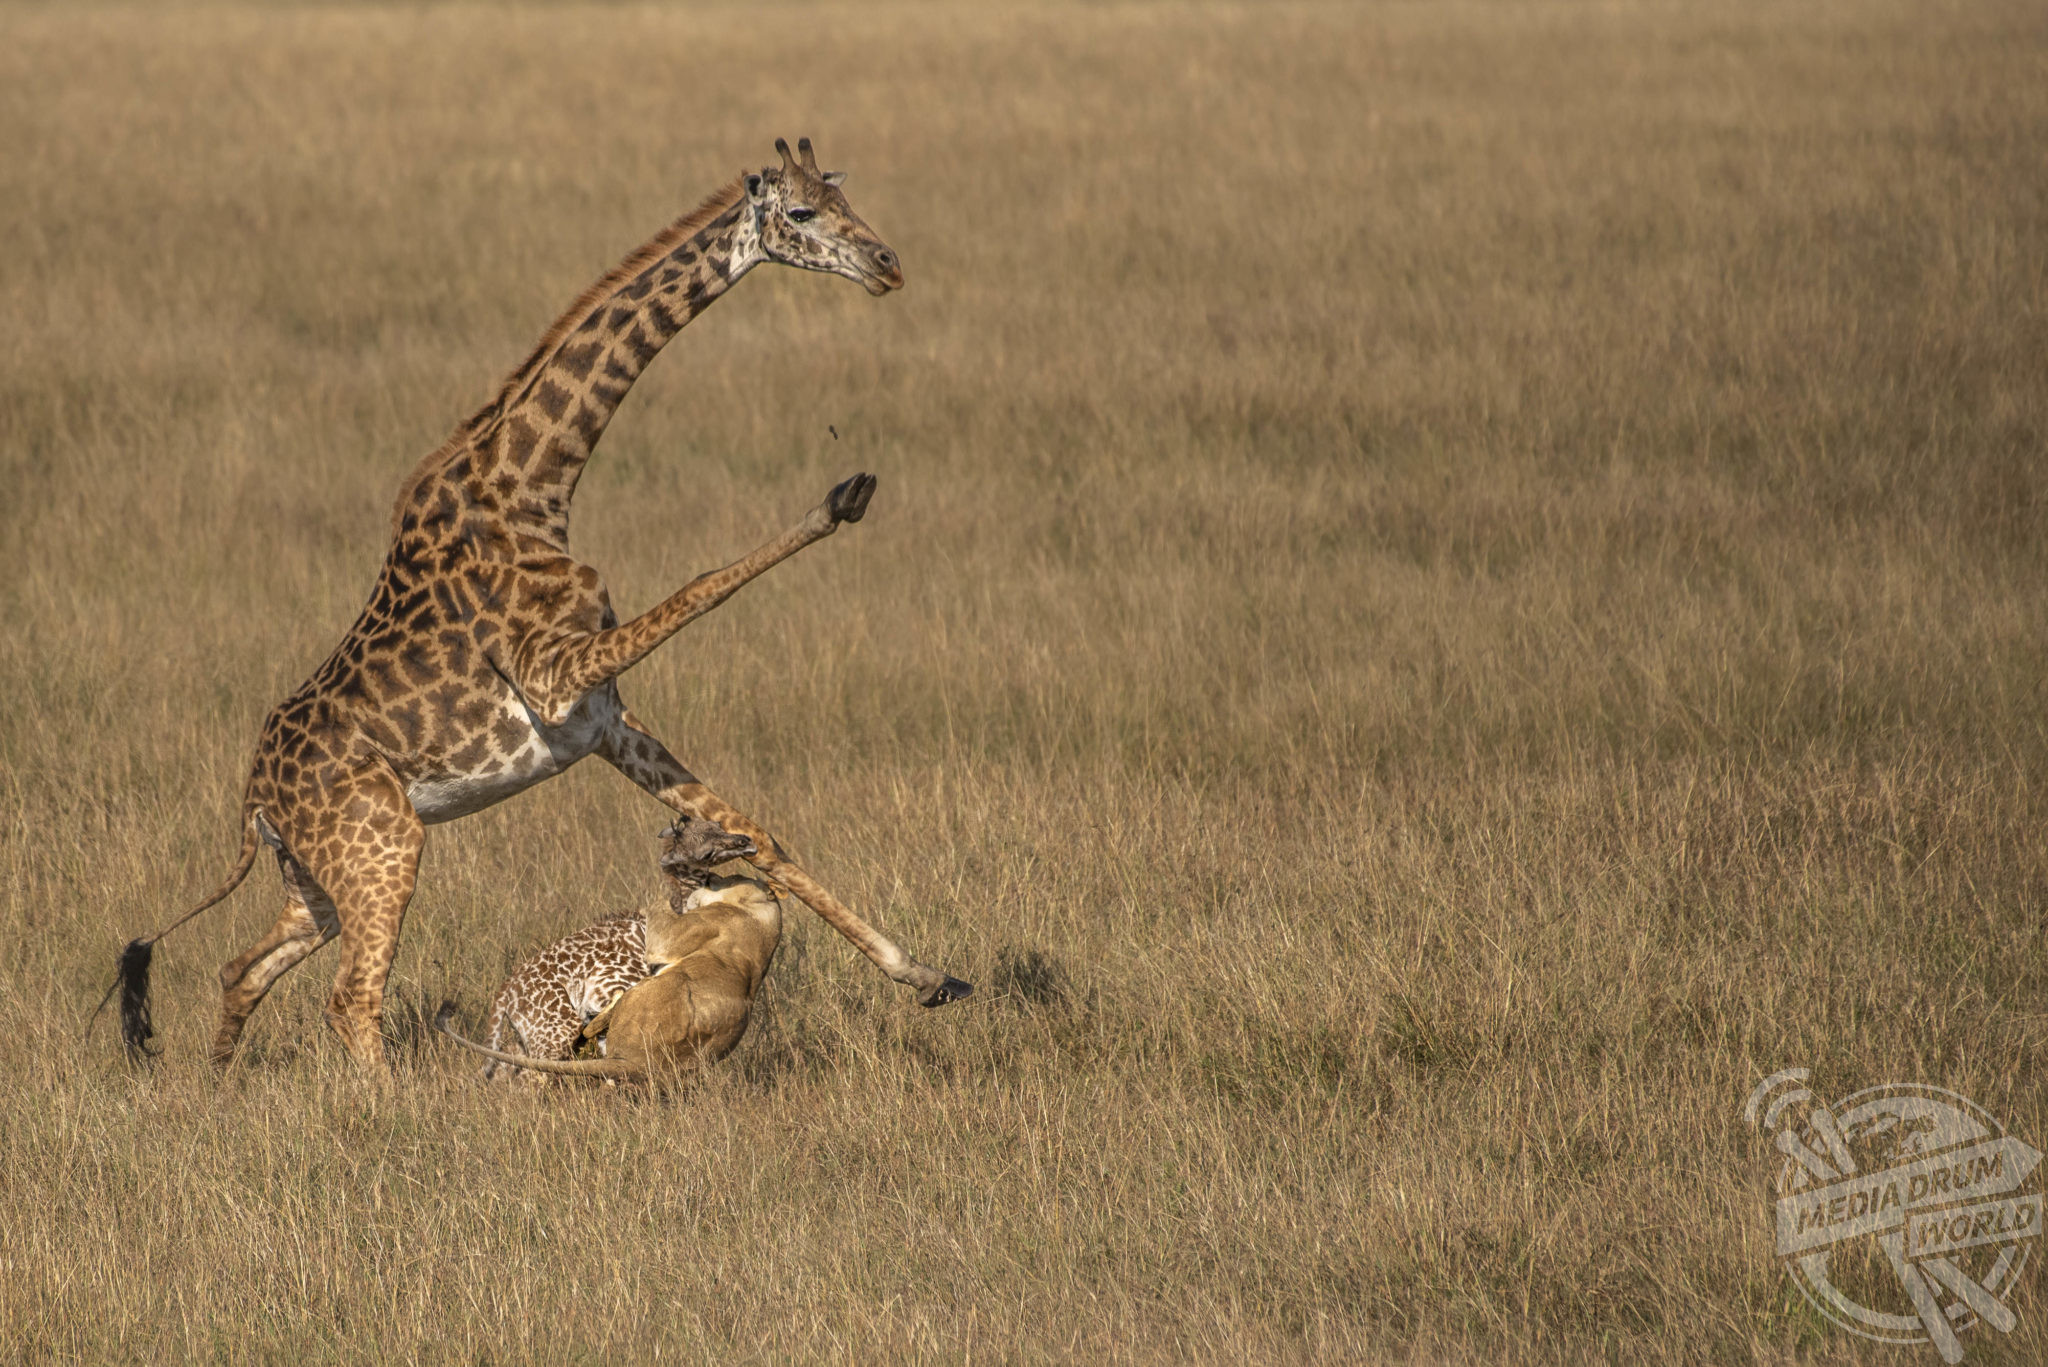 A Mother's Instinct: Giraffe Karate Kicks Lion in Bid to Save Newborn Calf  | Media Drum World